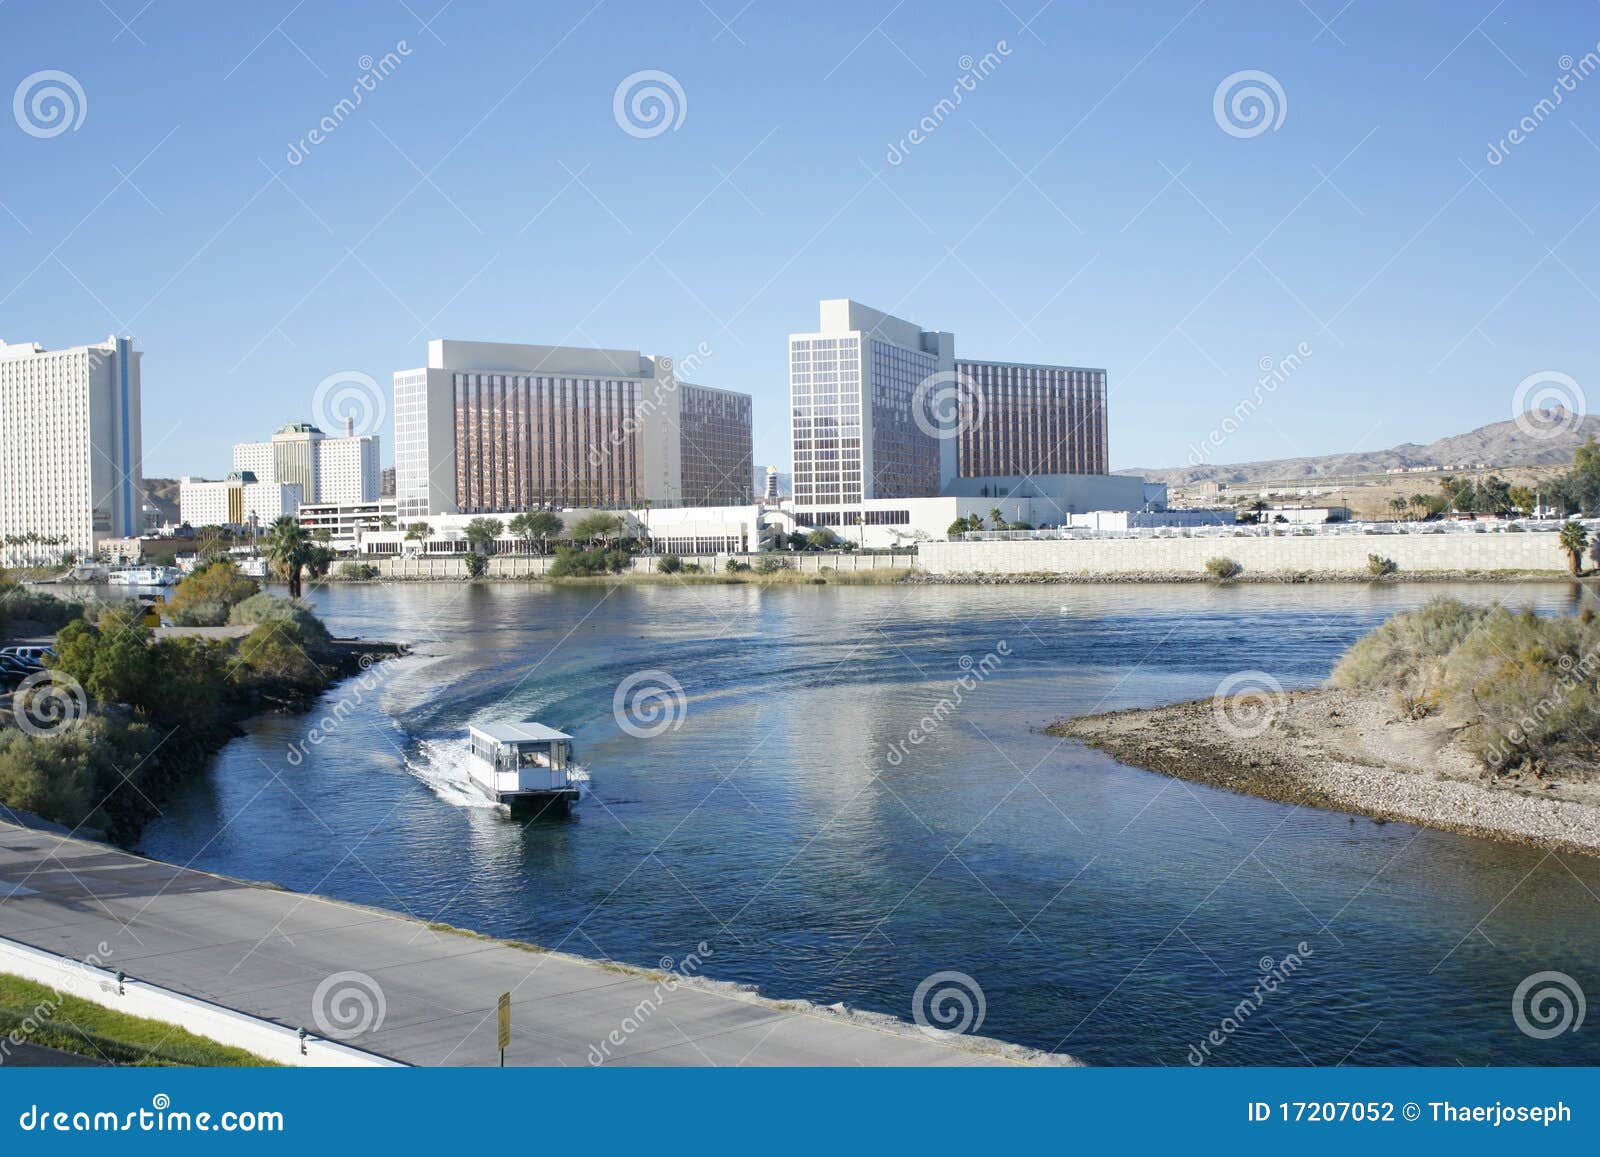 Laughlin Nevada Stock Photography - Image: 17207052